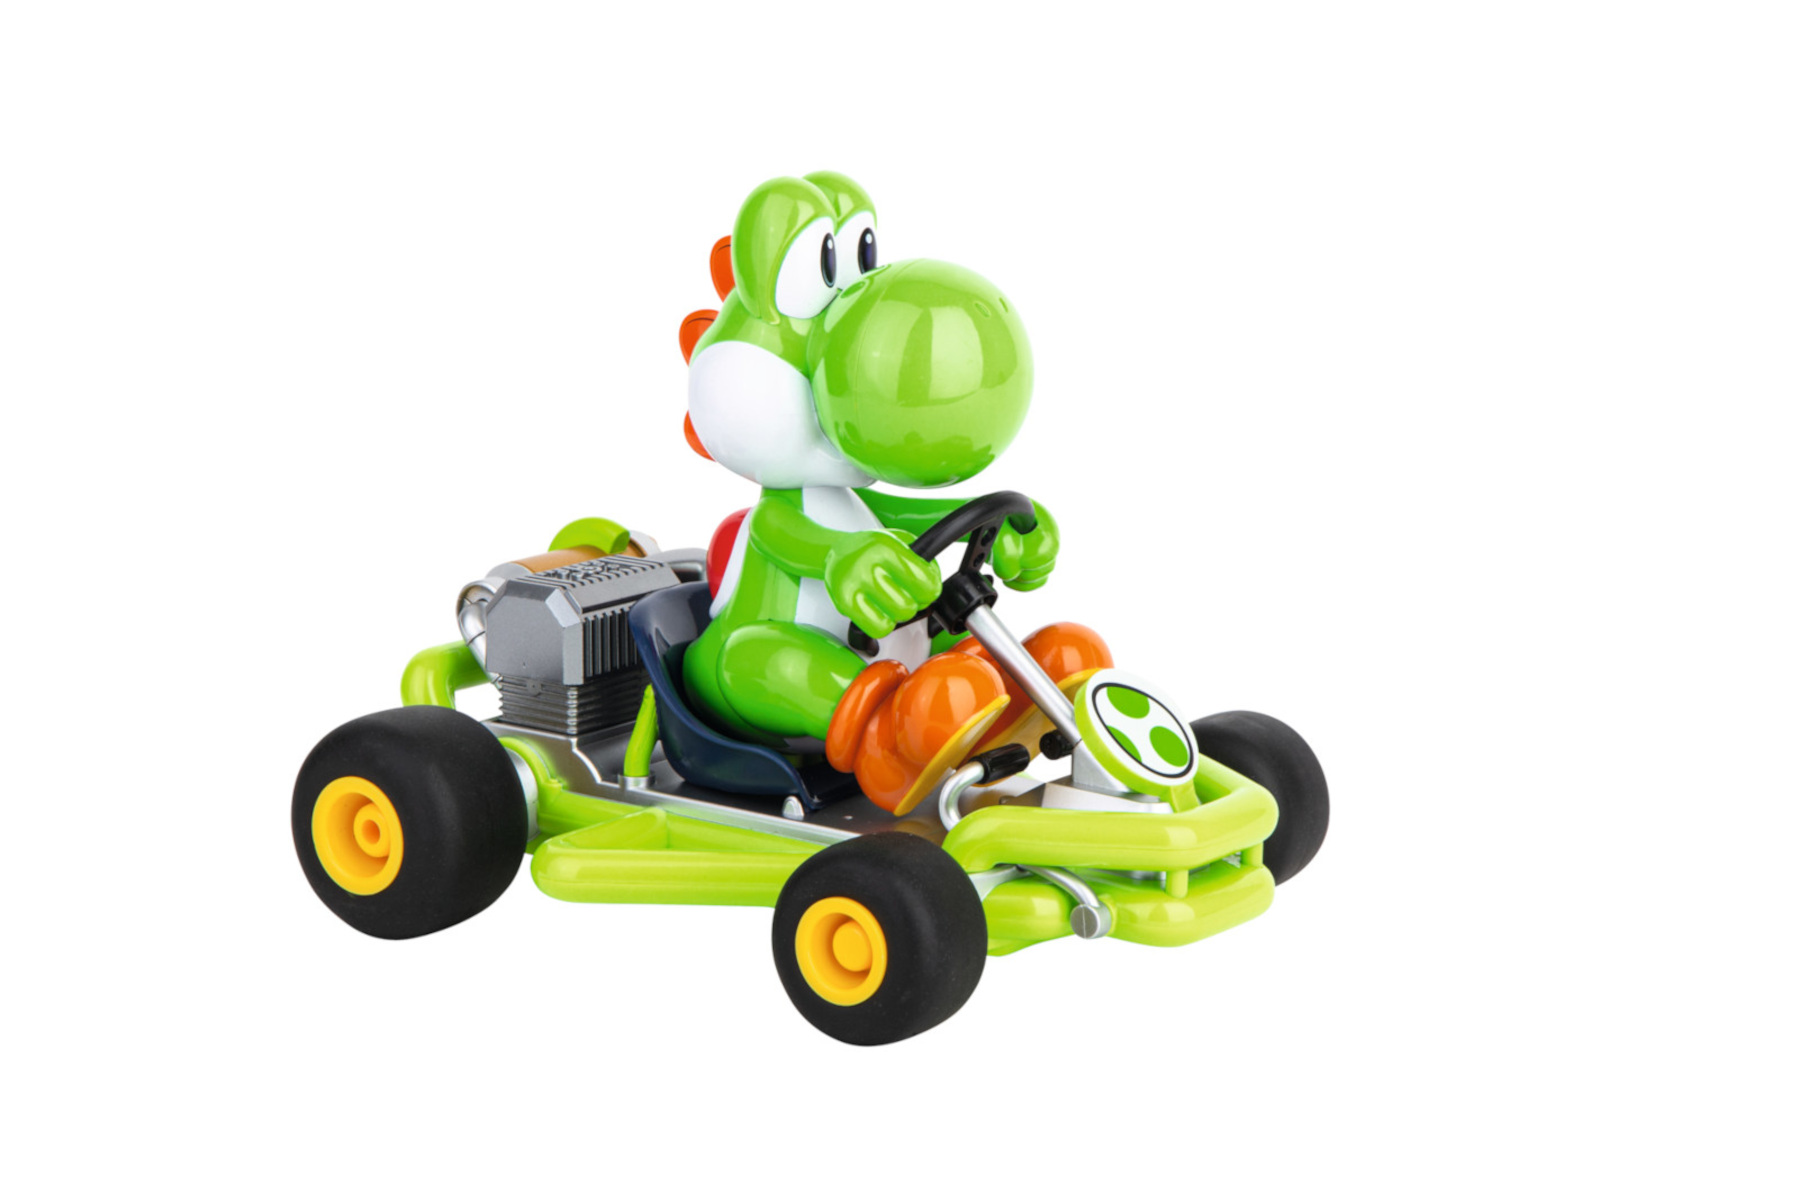 CARRERA RC Grün 6 Ferngesteuert RC-Fahrzeug, Kart Pipe Kart ab Yoshi 9 Mario Jahren km/h